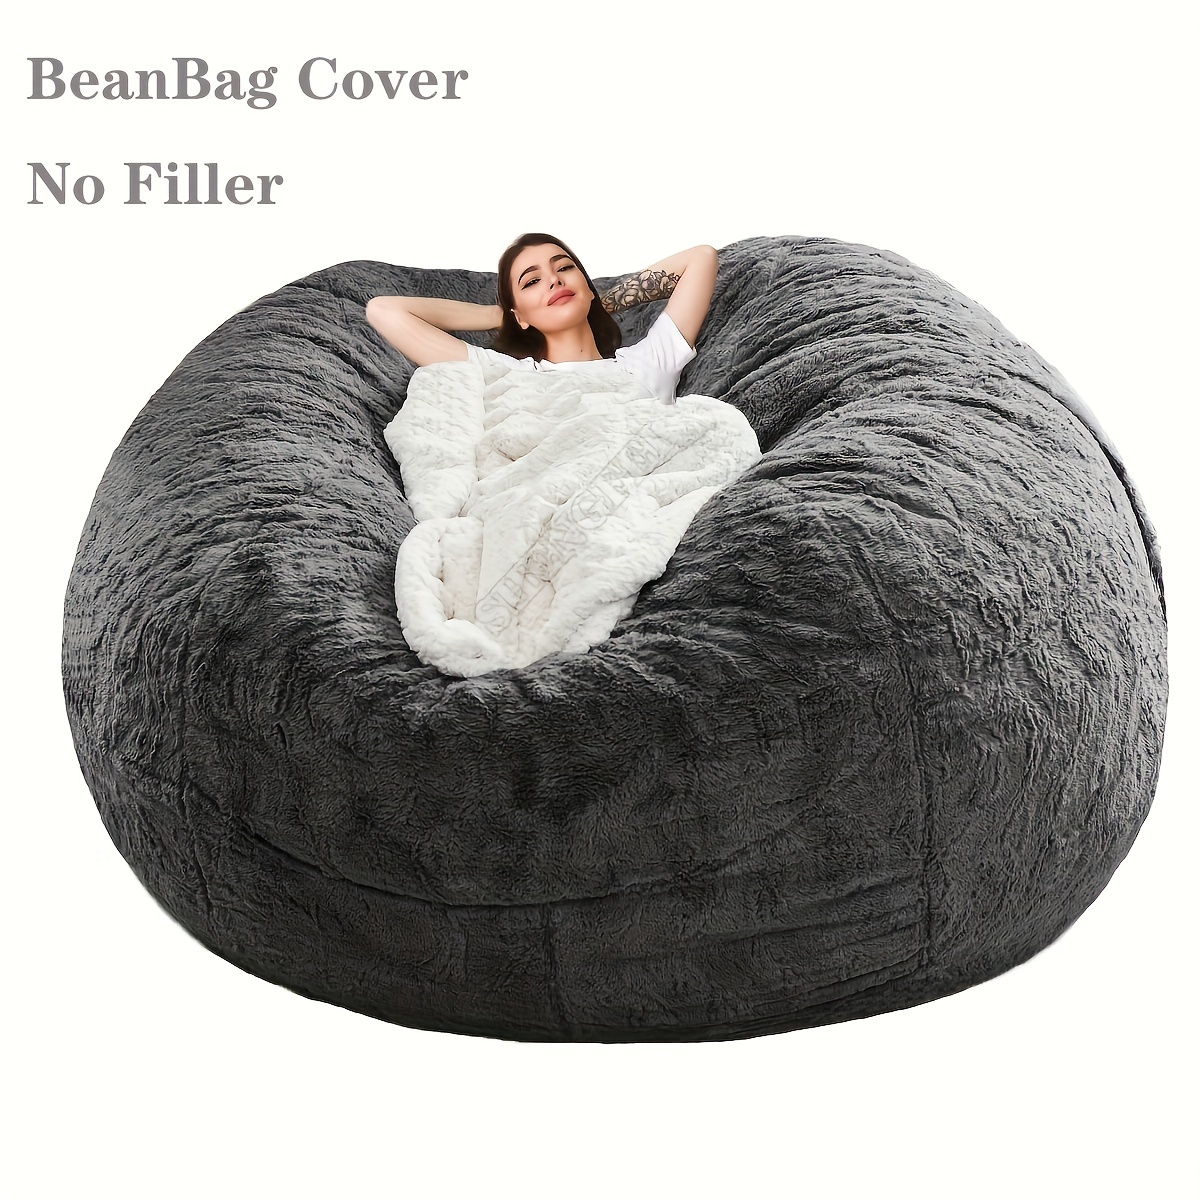  EKWQ Bean Bag Chair Cover,Chair Cushion 7ft Giant Fur Bean Bag  Cover Living Room Furniture Big Round Soft Fluffy Faux Fur BeanBag Sofa Bed  Cover (No Filler)(Yellow -New)… : Home 